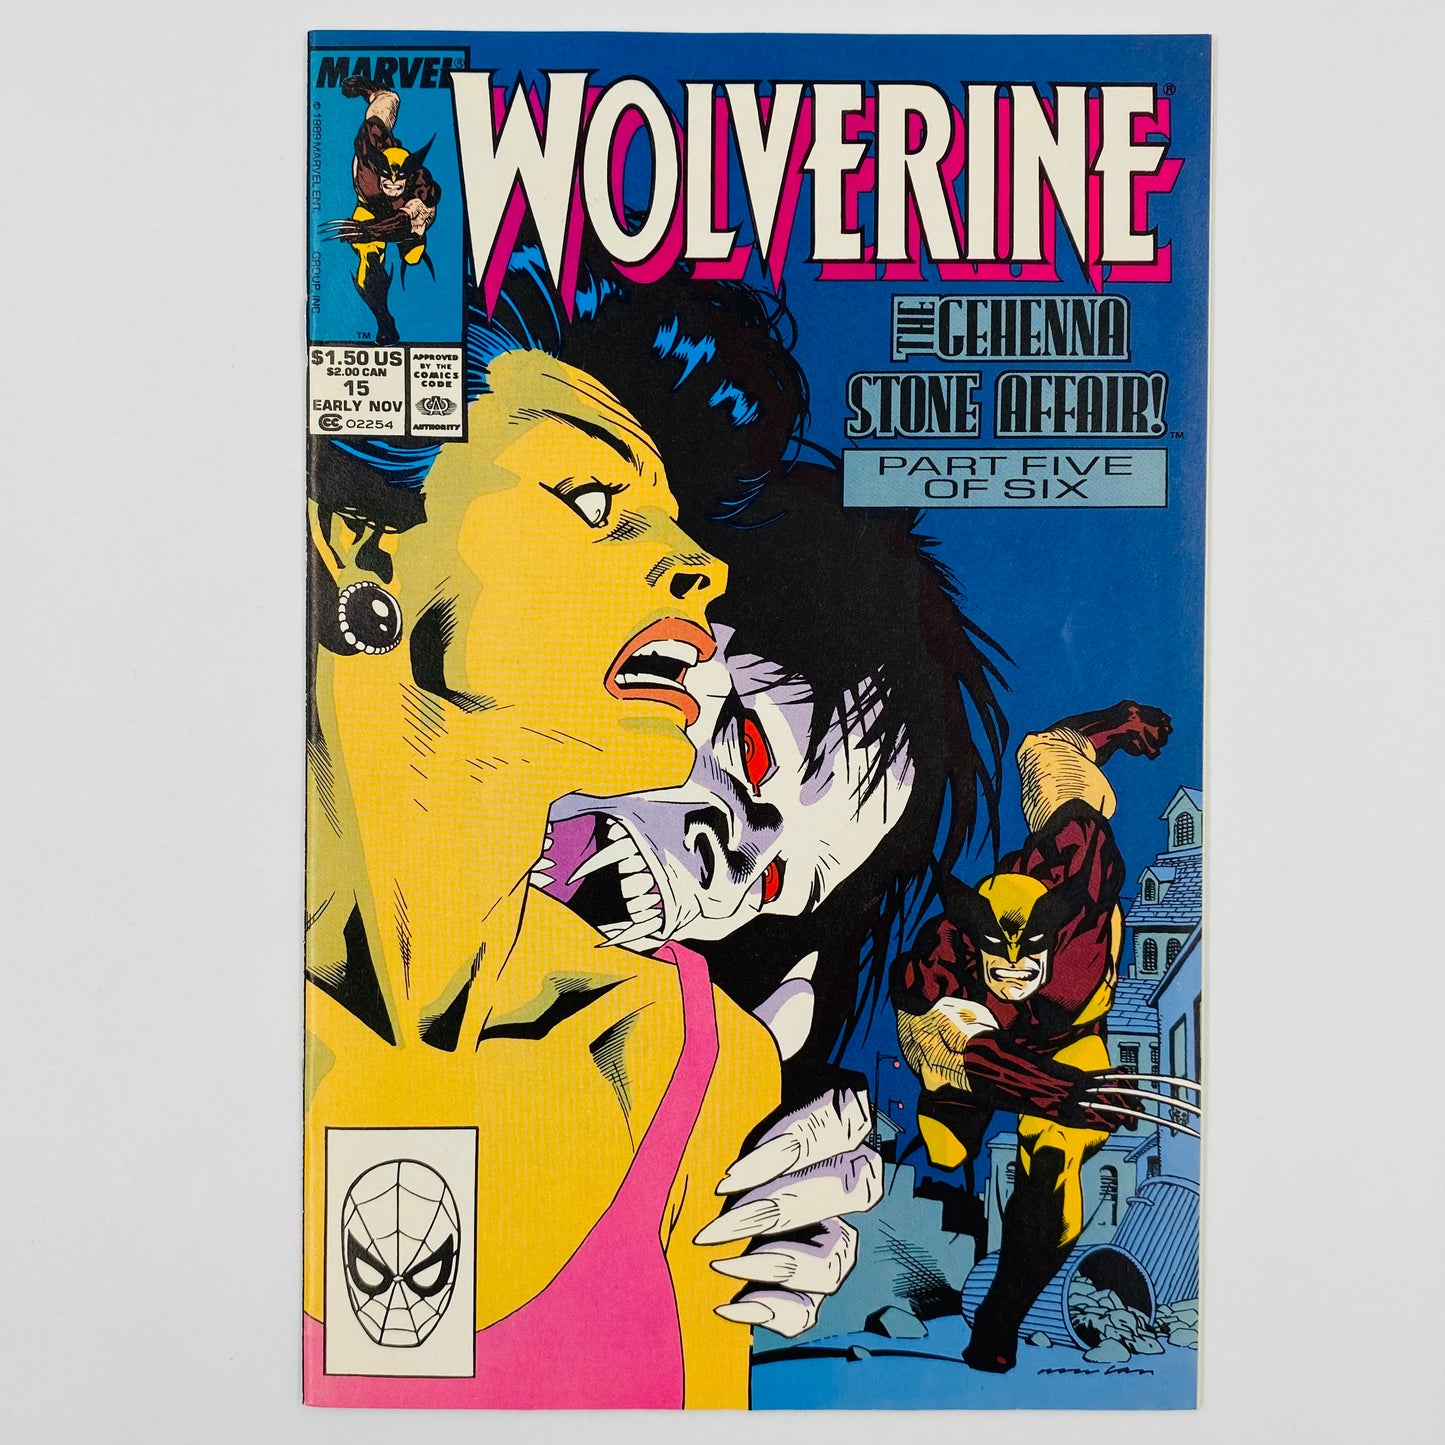 Wolverine #11-16 The Gehenna Stone Affair (1989) Marvel